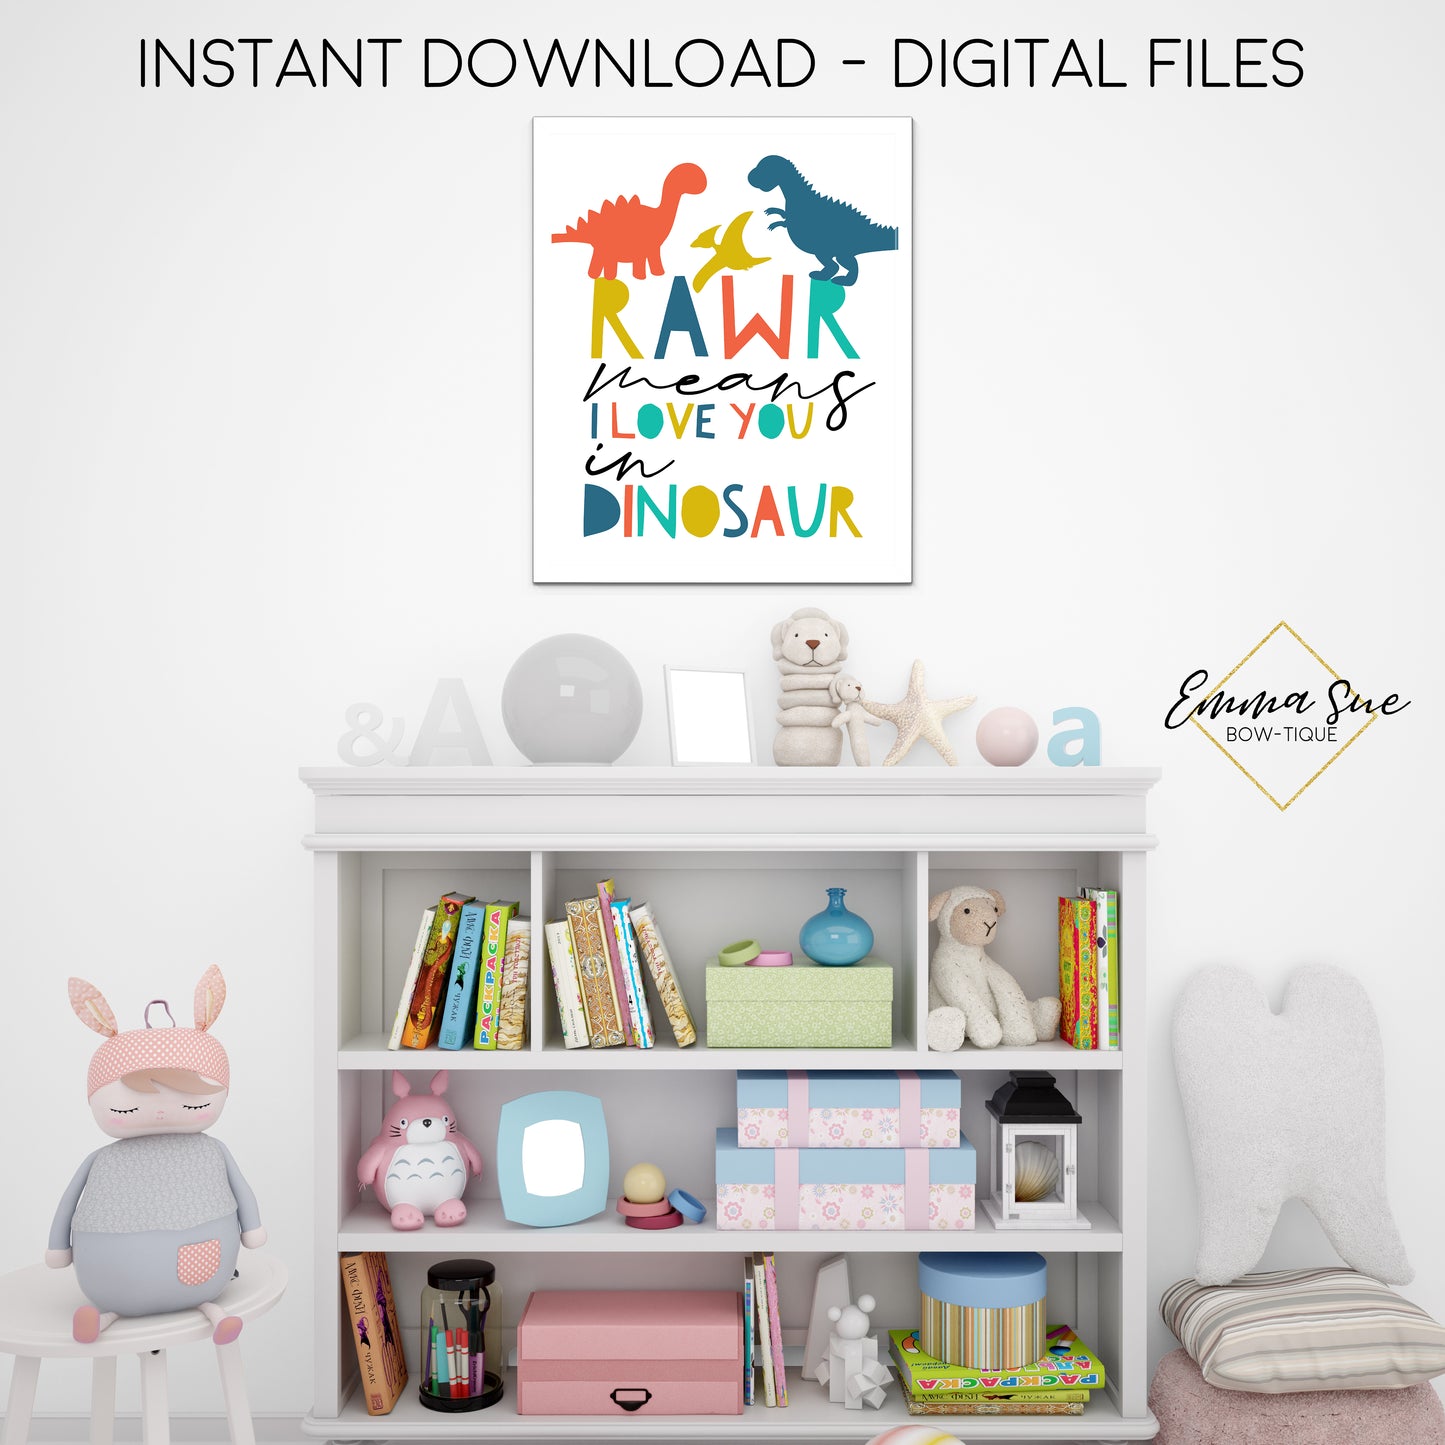 Rawr Means I love you in Dinosaur - Kid's Playroom or Bedroom Printable Wall Art  - Digital File - Instant Download